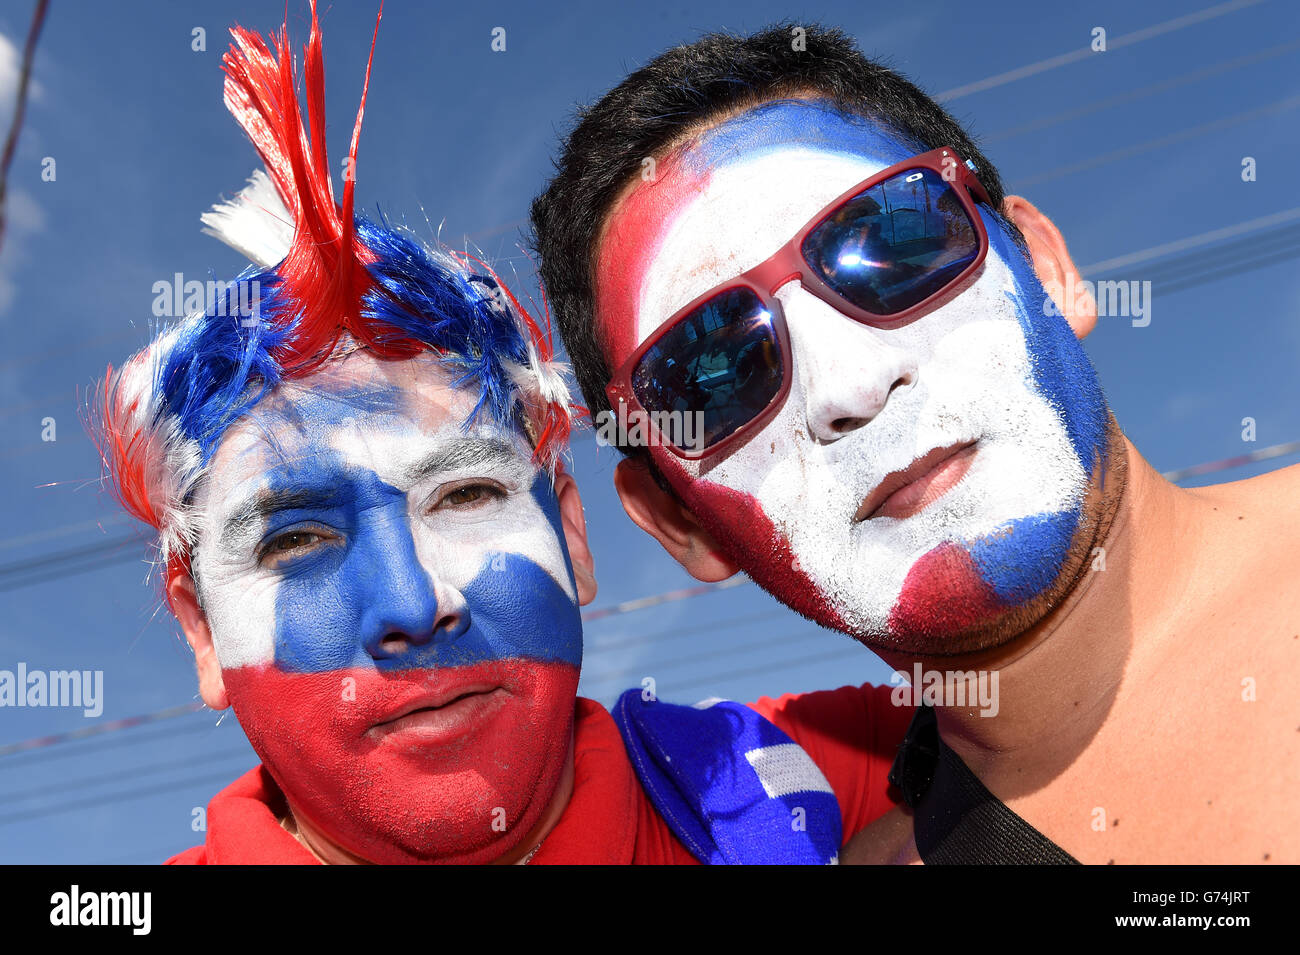 Soccer - FIFA World Cup 2014 - Group B - Chile v Australia - Arena Pantanal Stock Photo